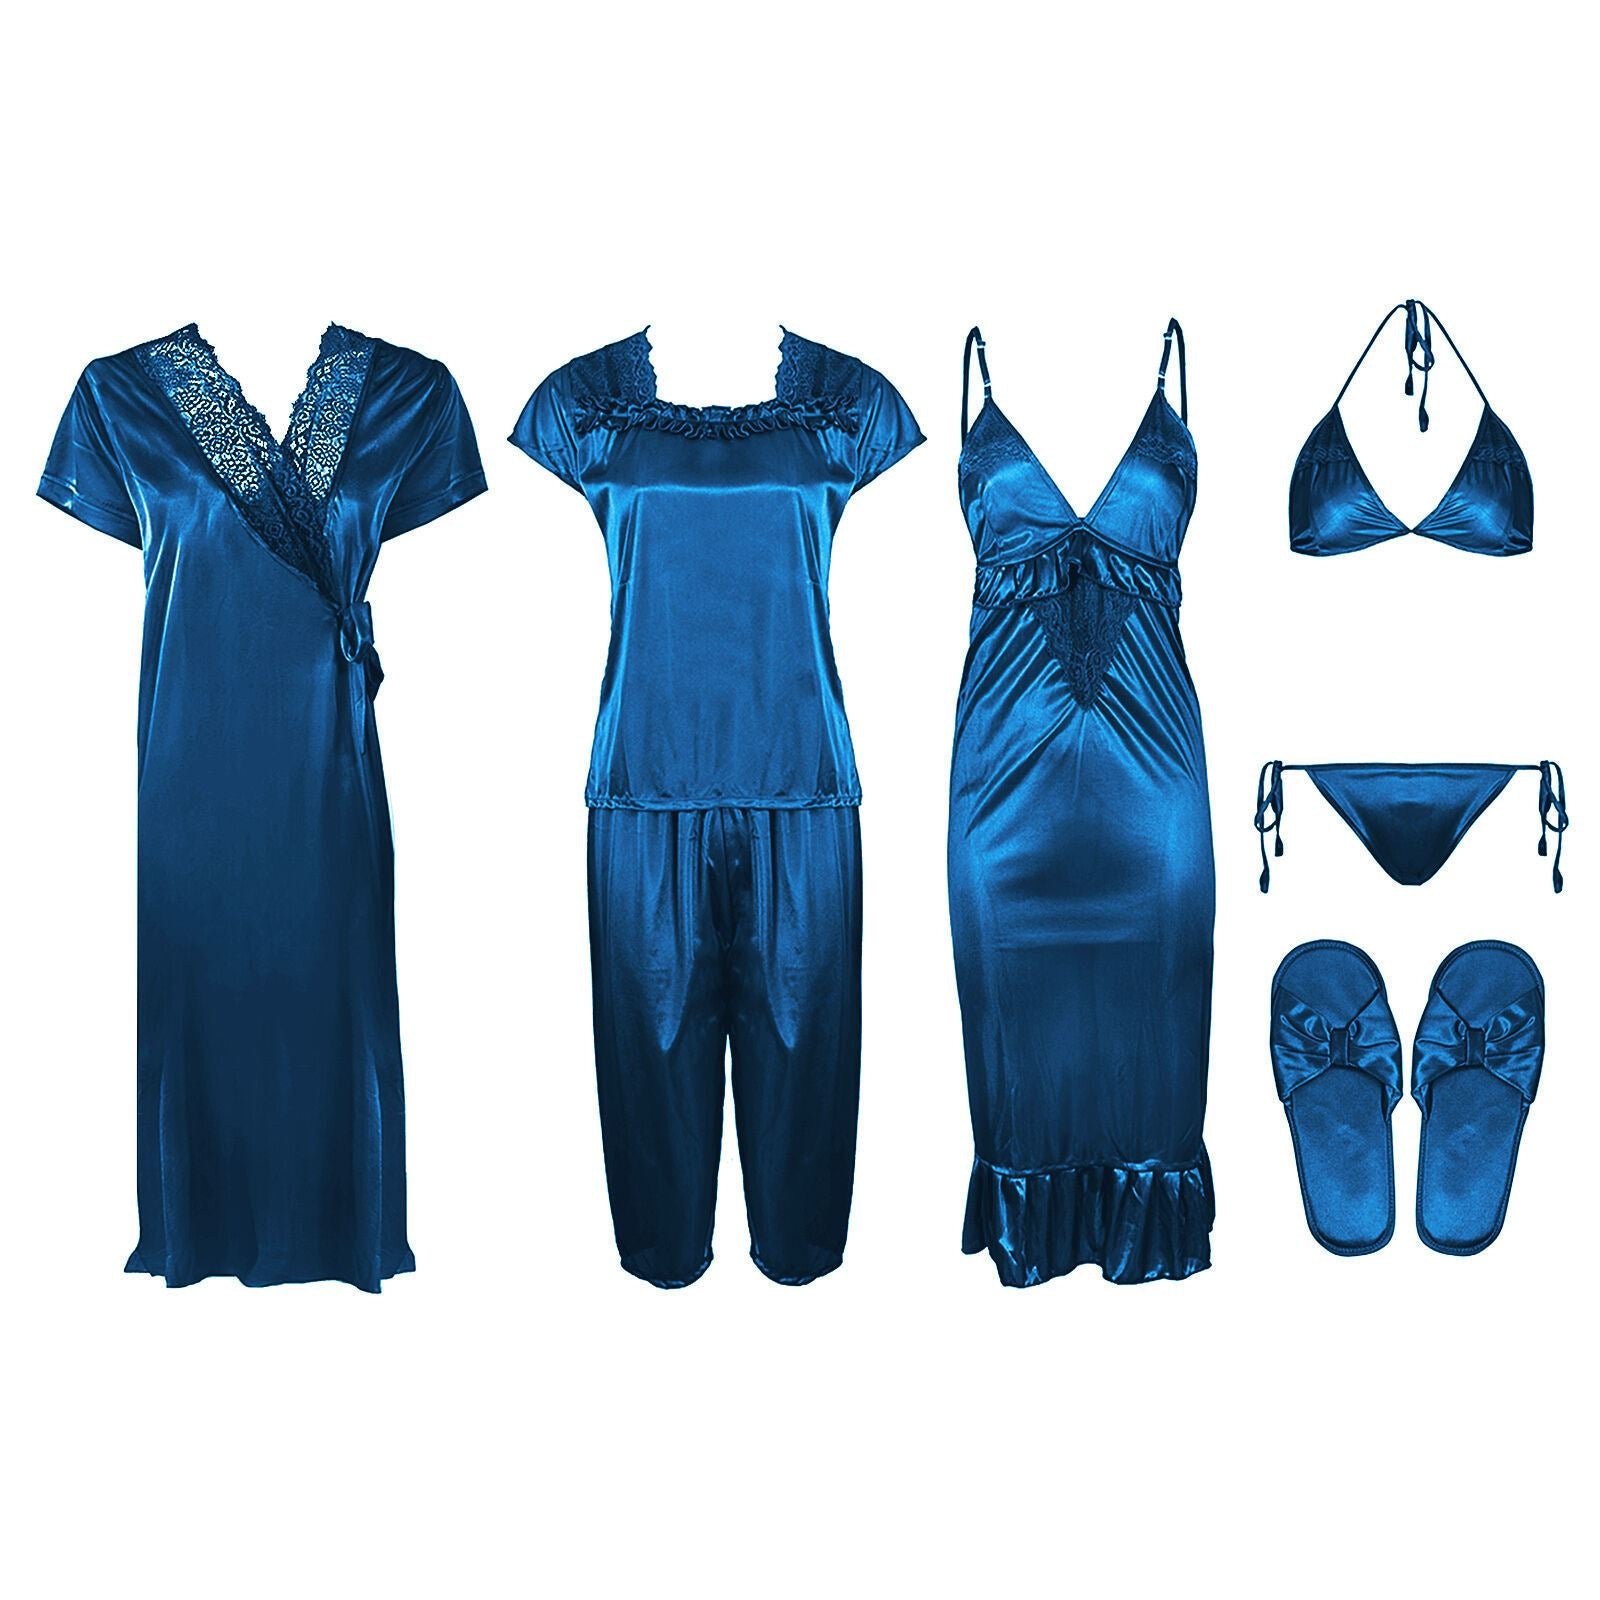 Royal Blue 1 / One Size Ladies Satin Nightwear Set / Pyjama Set The Orange Tags